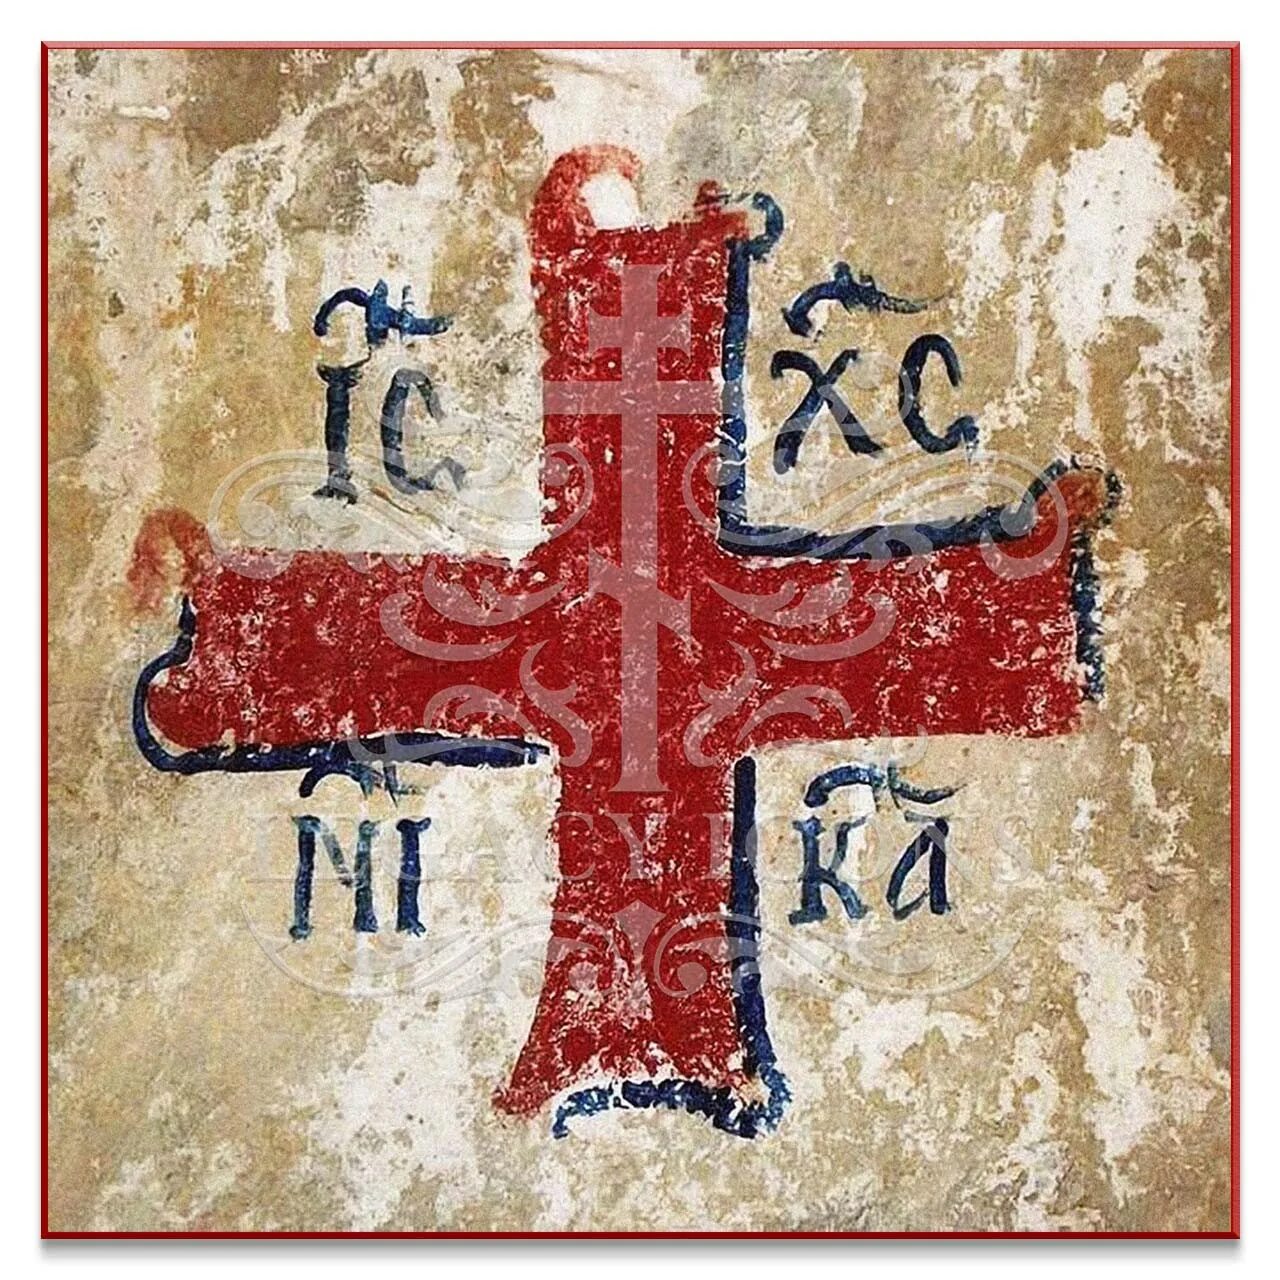 Ис хс. Крест ic XC Nika. Символы христианства.